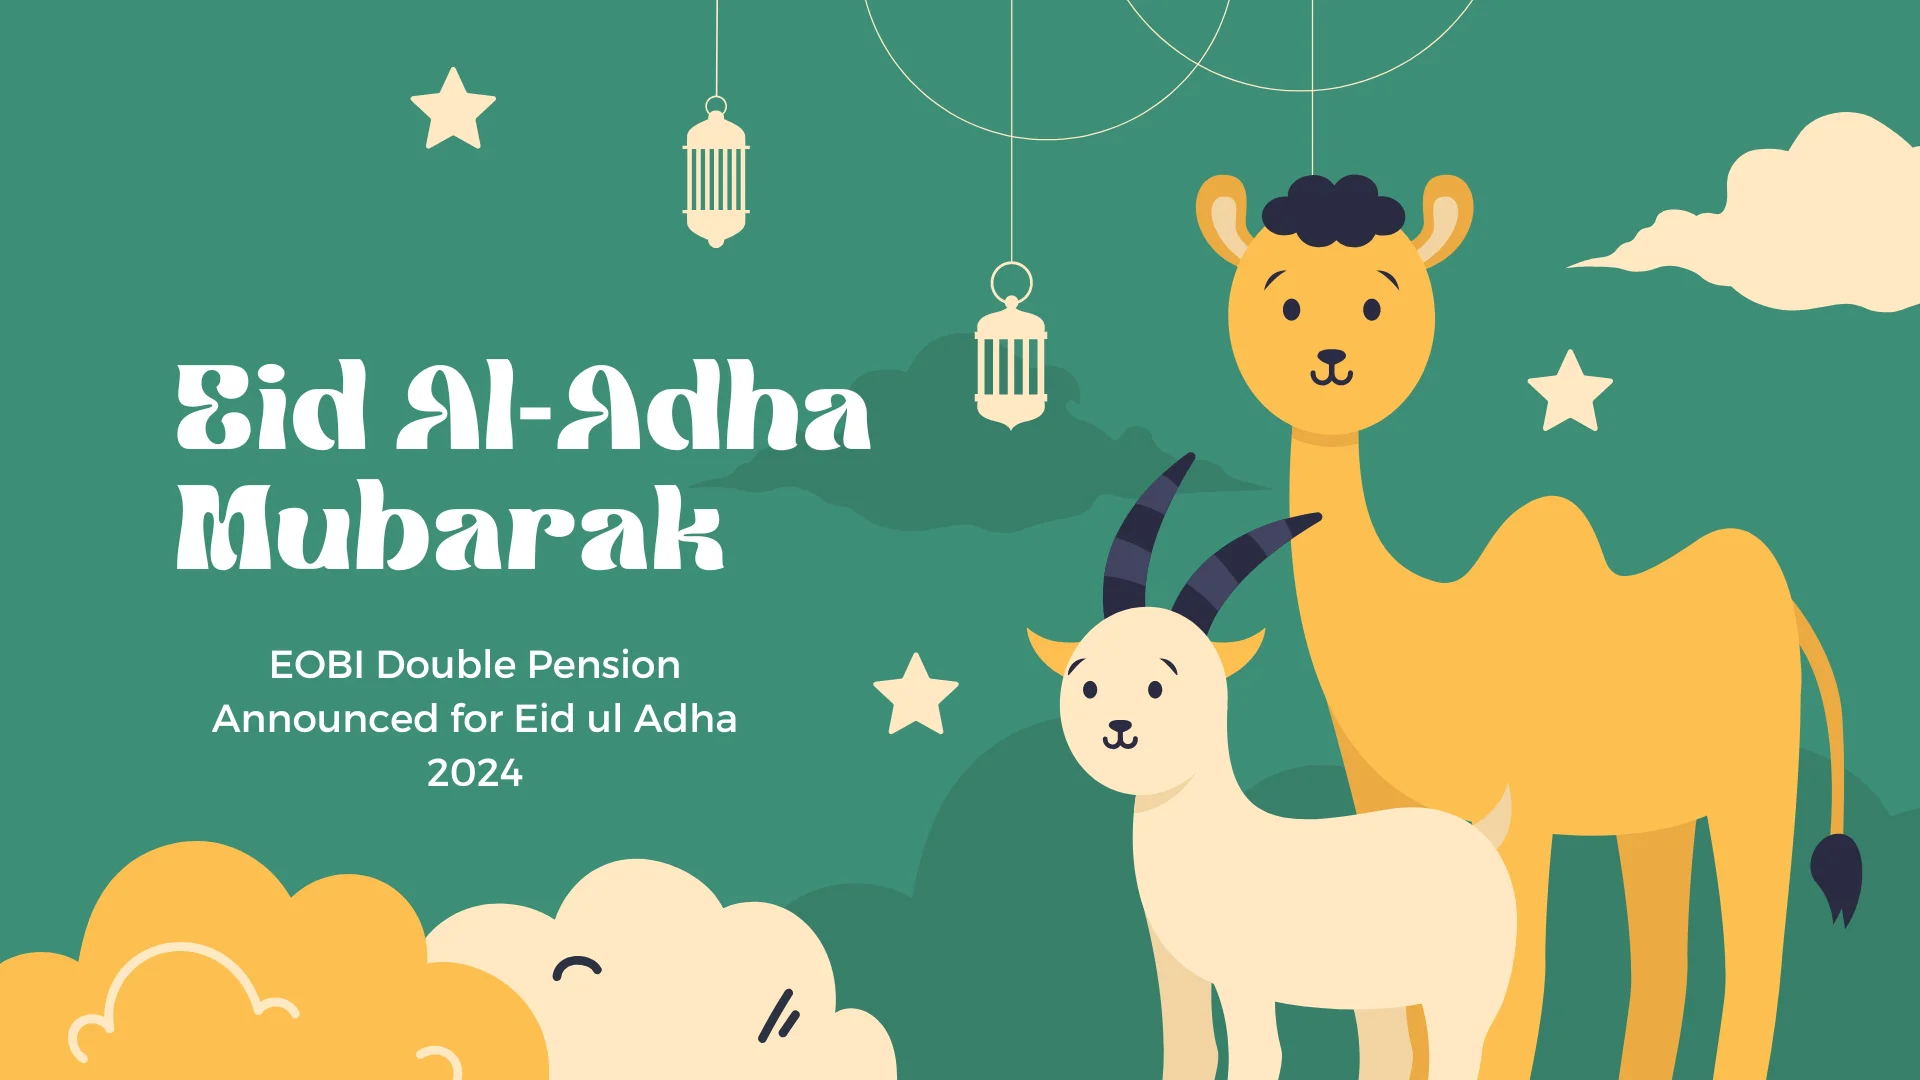 EOBI Double Pension Announced for Eid ul Adha 2024